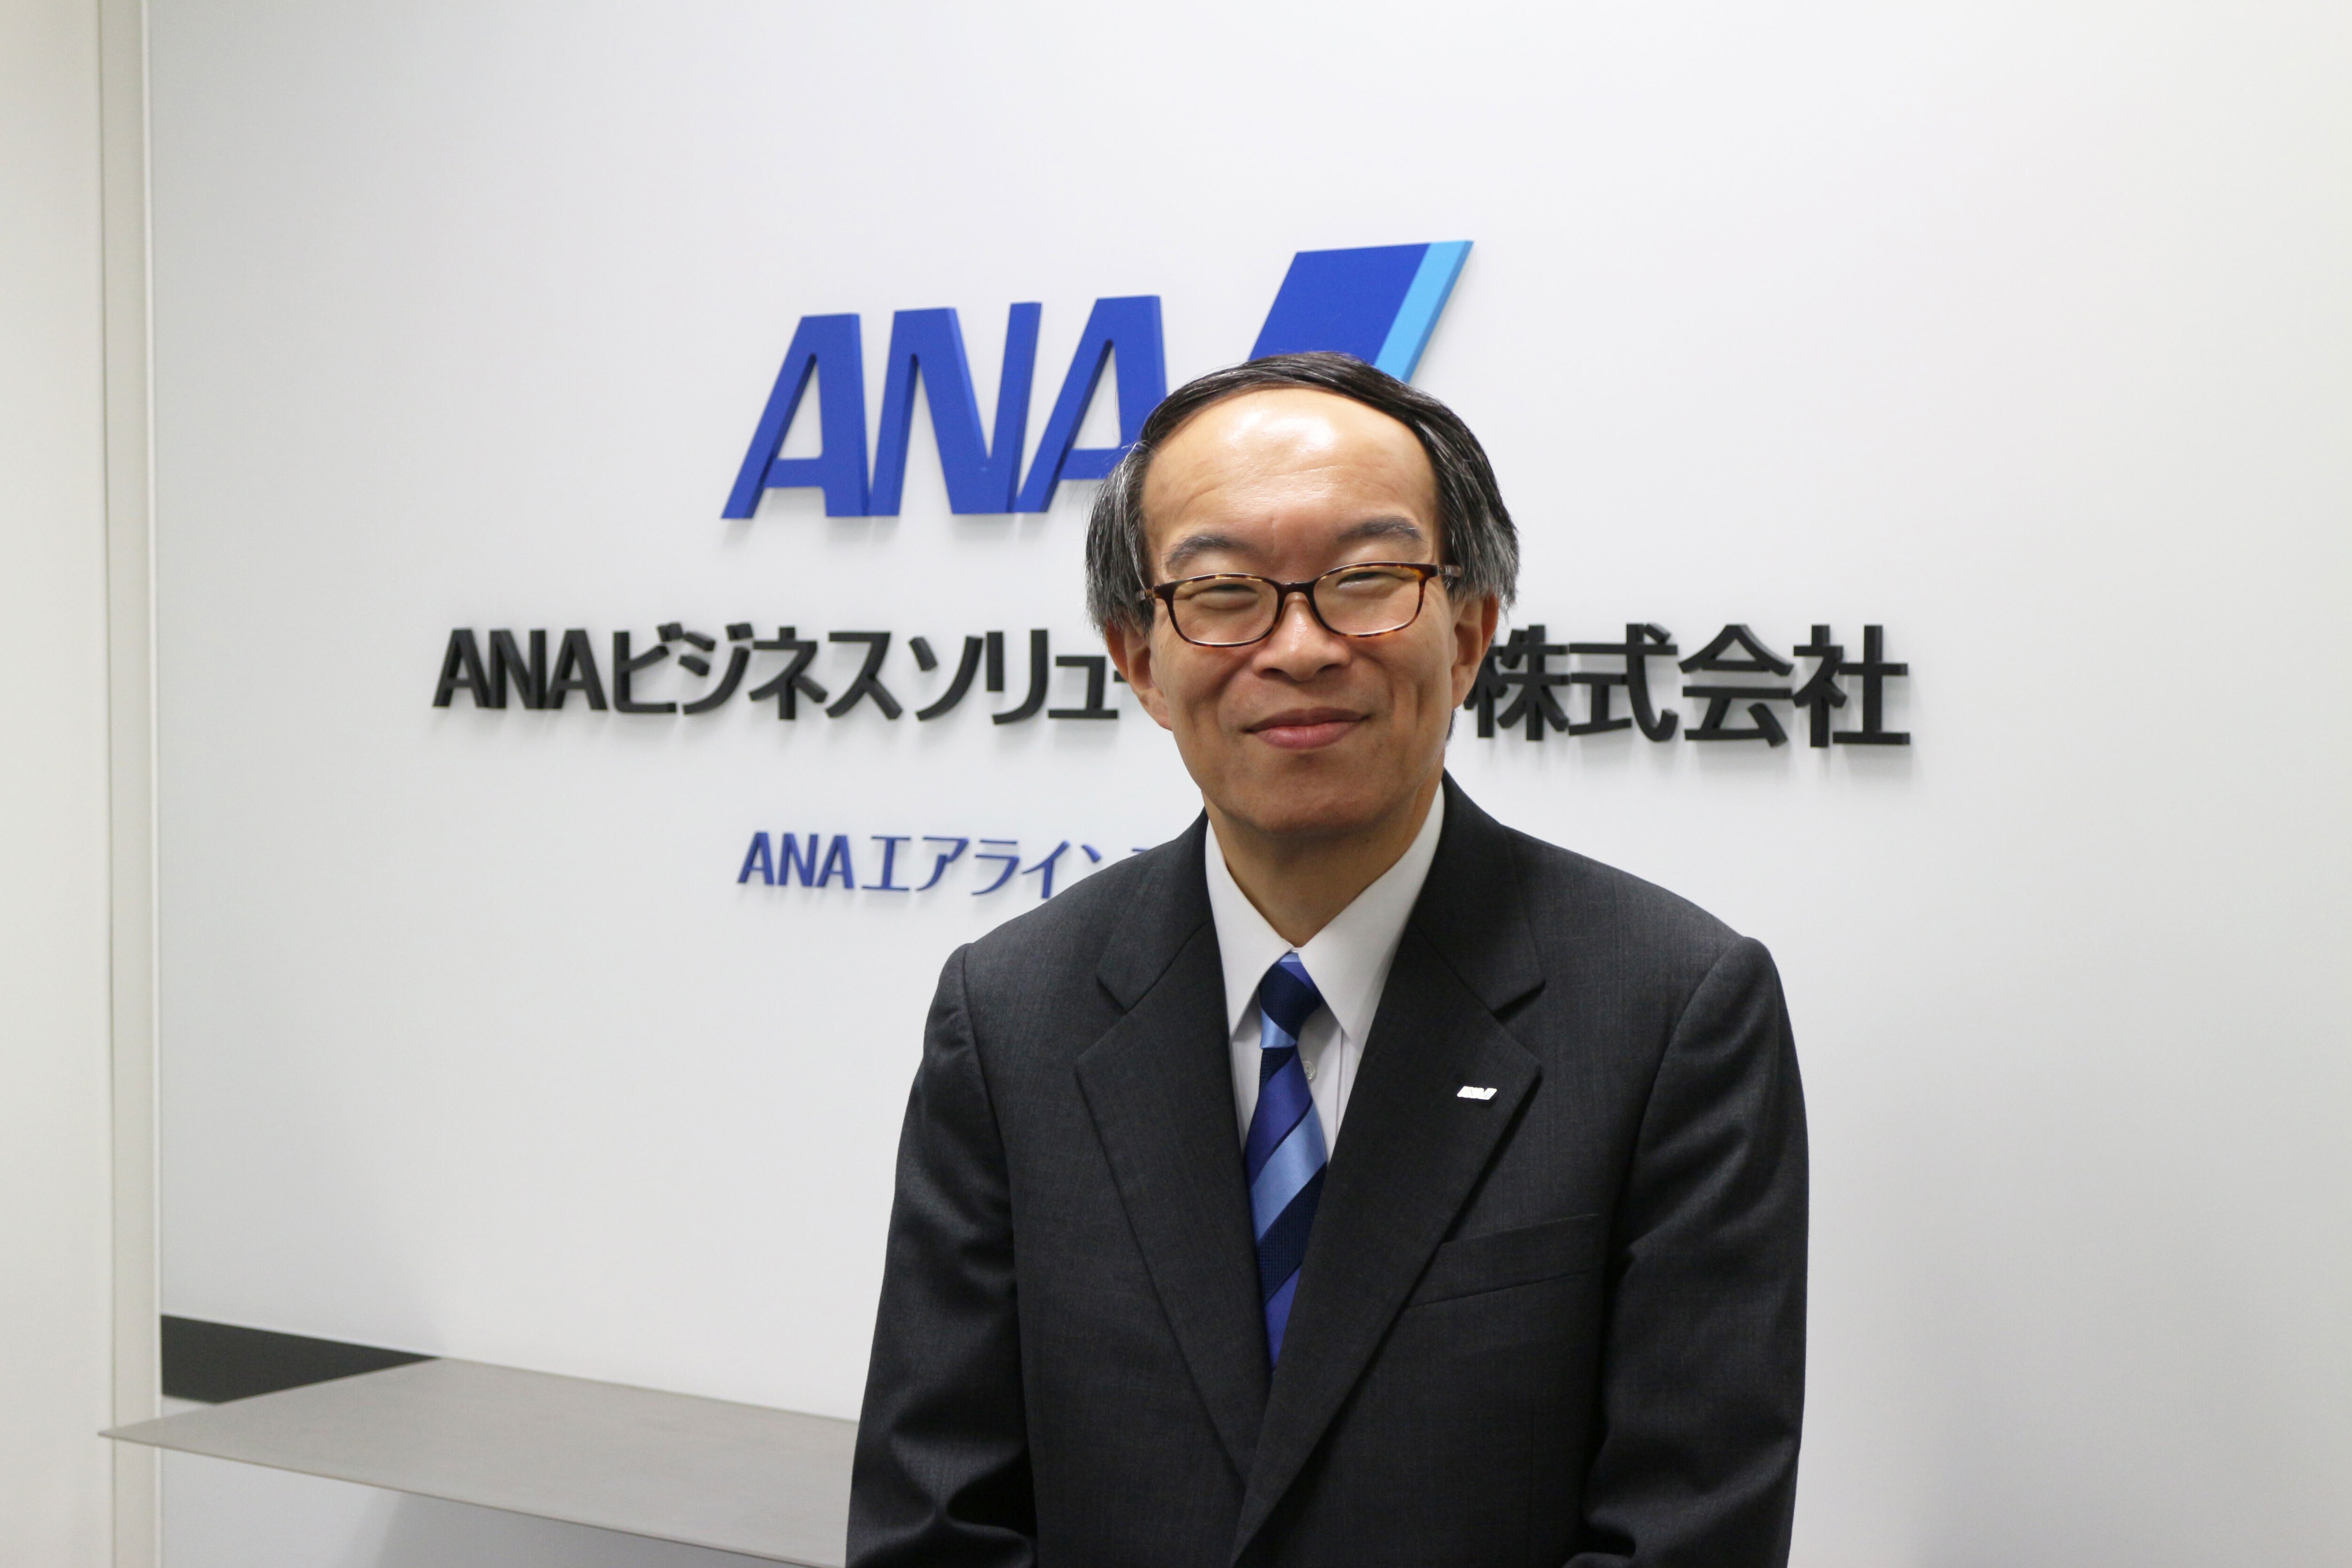 ANAビジネスソリューション株式会社 代表取締役社長 柴田 雄司